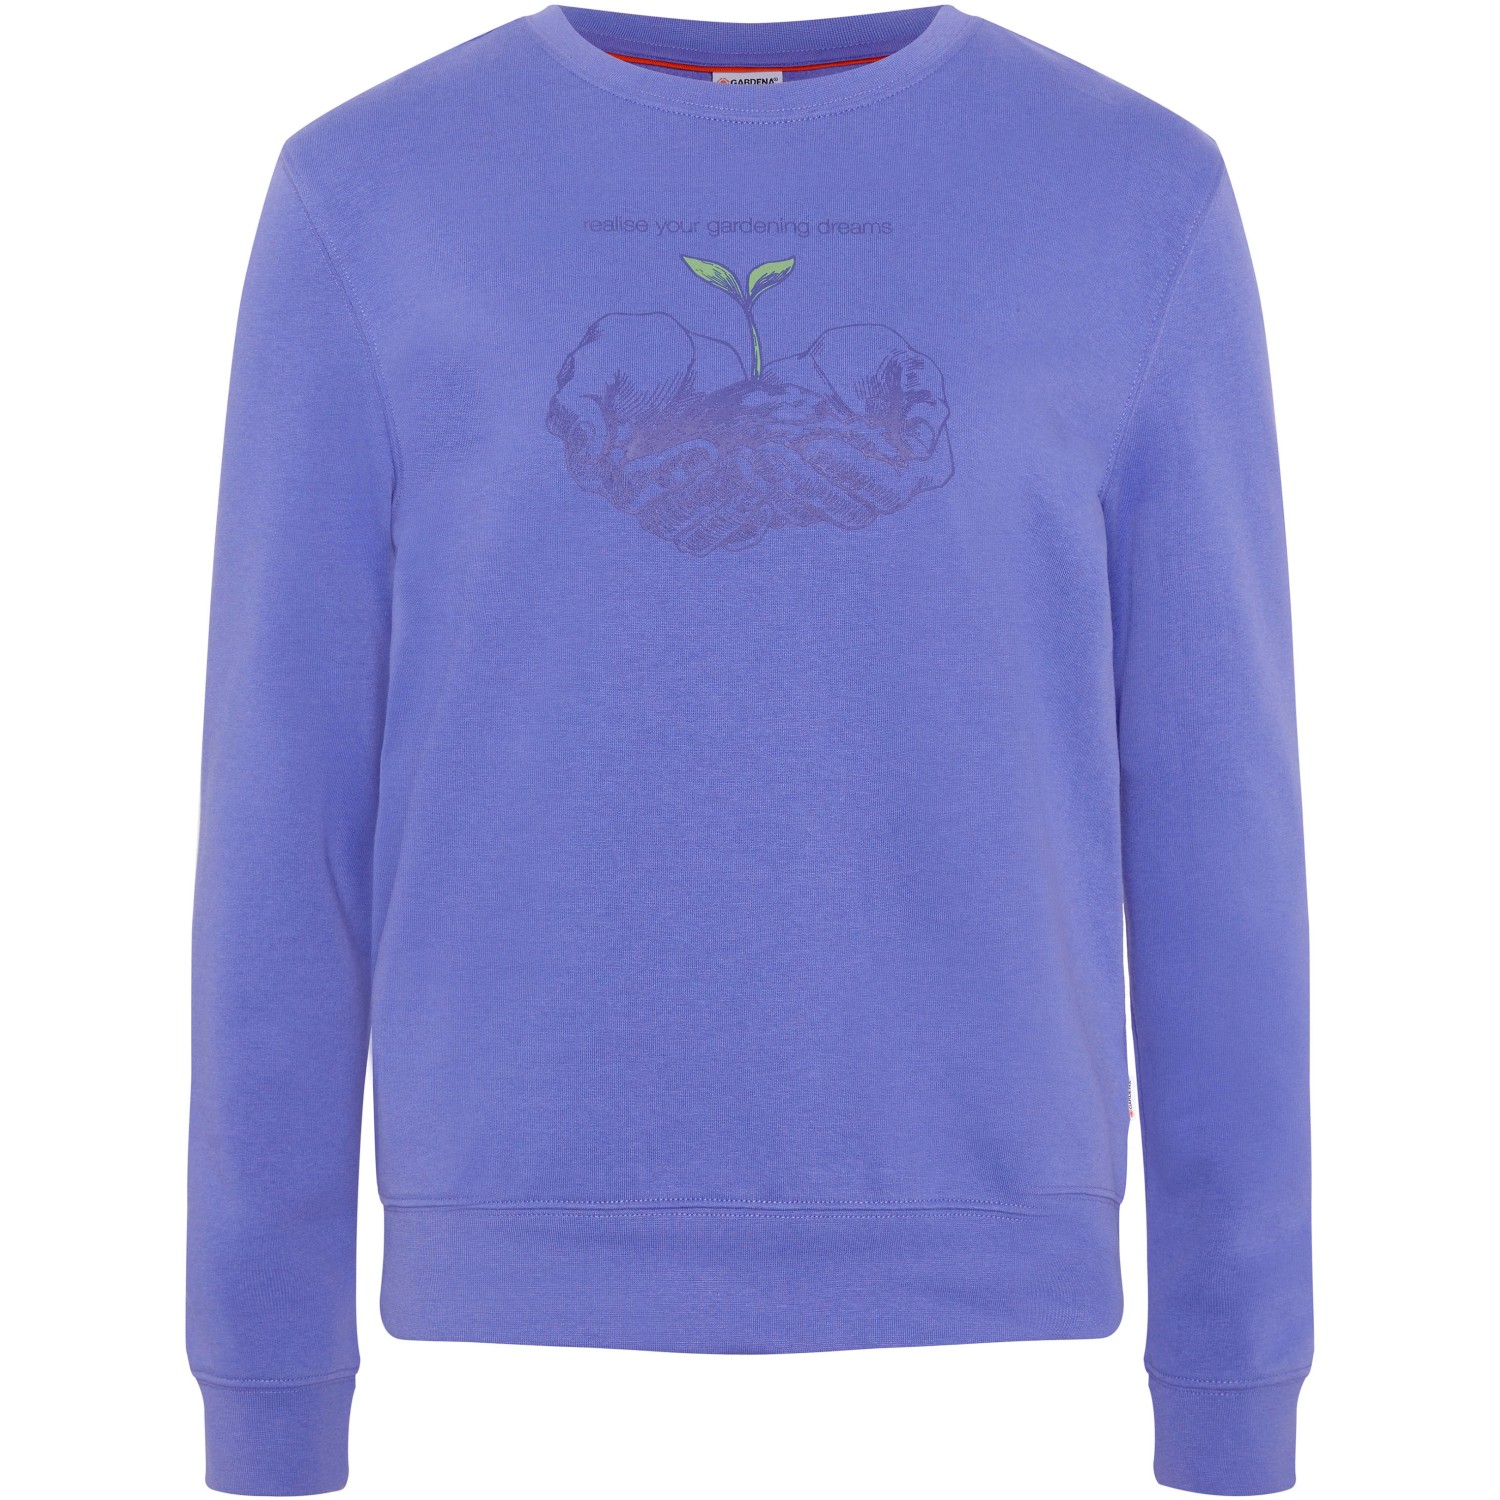 Gardena Women Sweatshirt Regular Fit Very Peri Gr. XL kaufen bei OBI